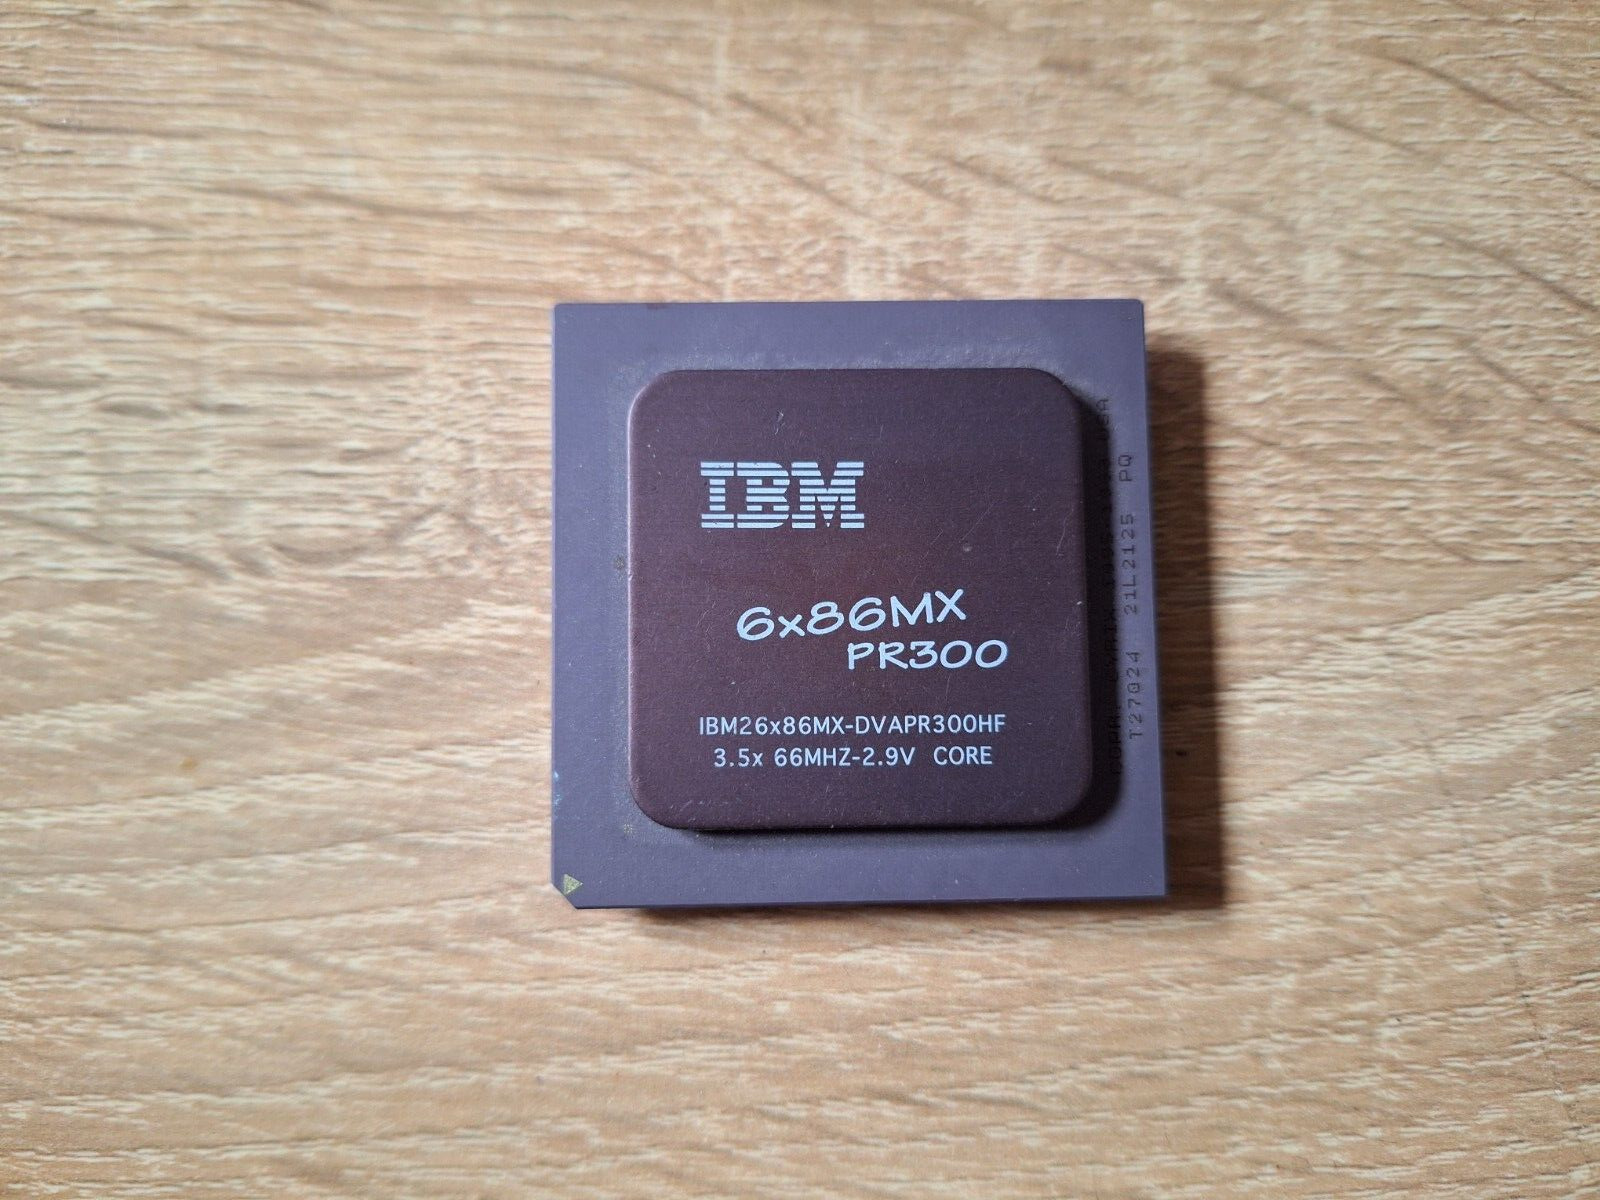 IBM 6x86MX PR300 IBM 6x86MX-DVAPR300HF vintage CPU GOLD6x86 vintage CPU GOLD